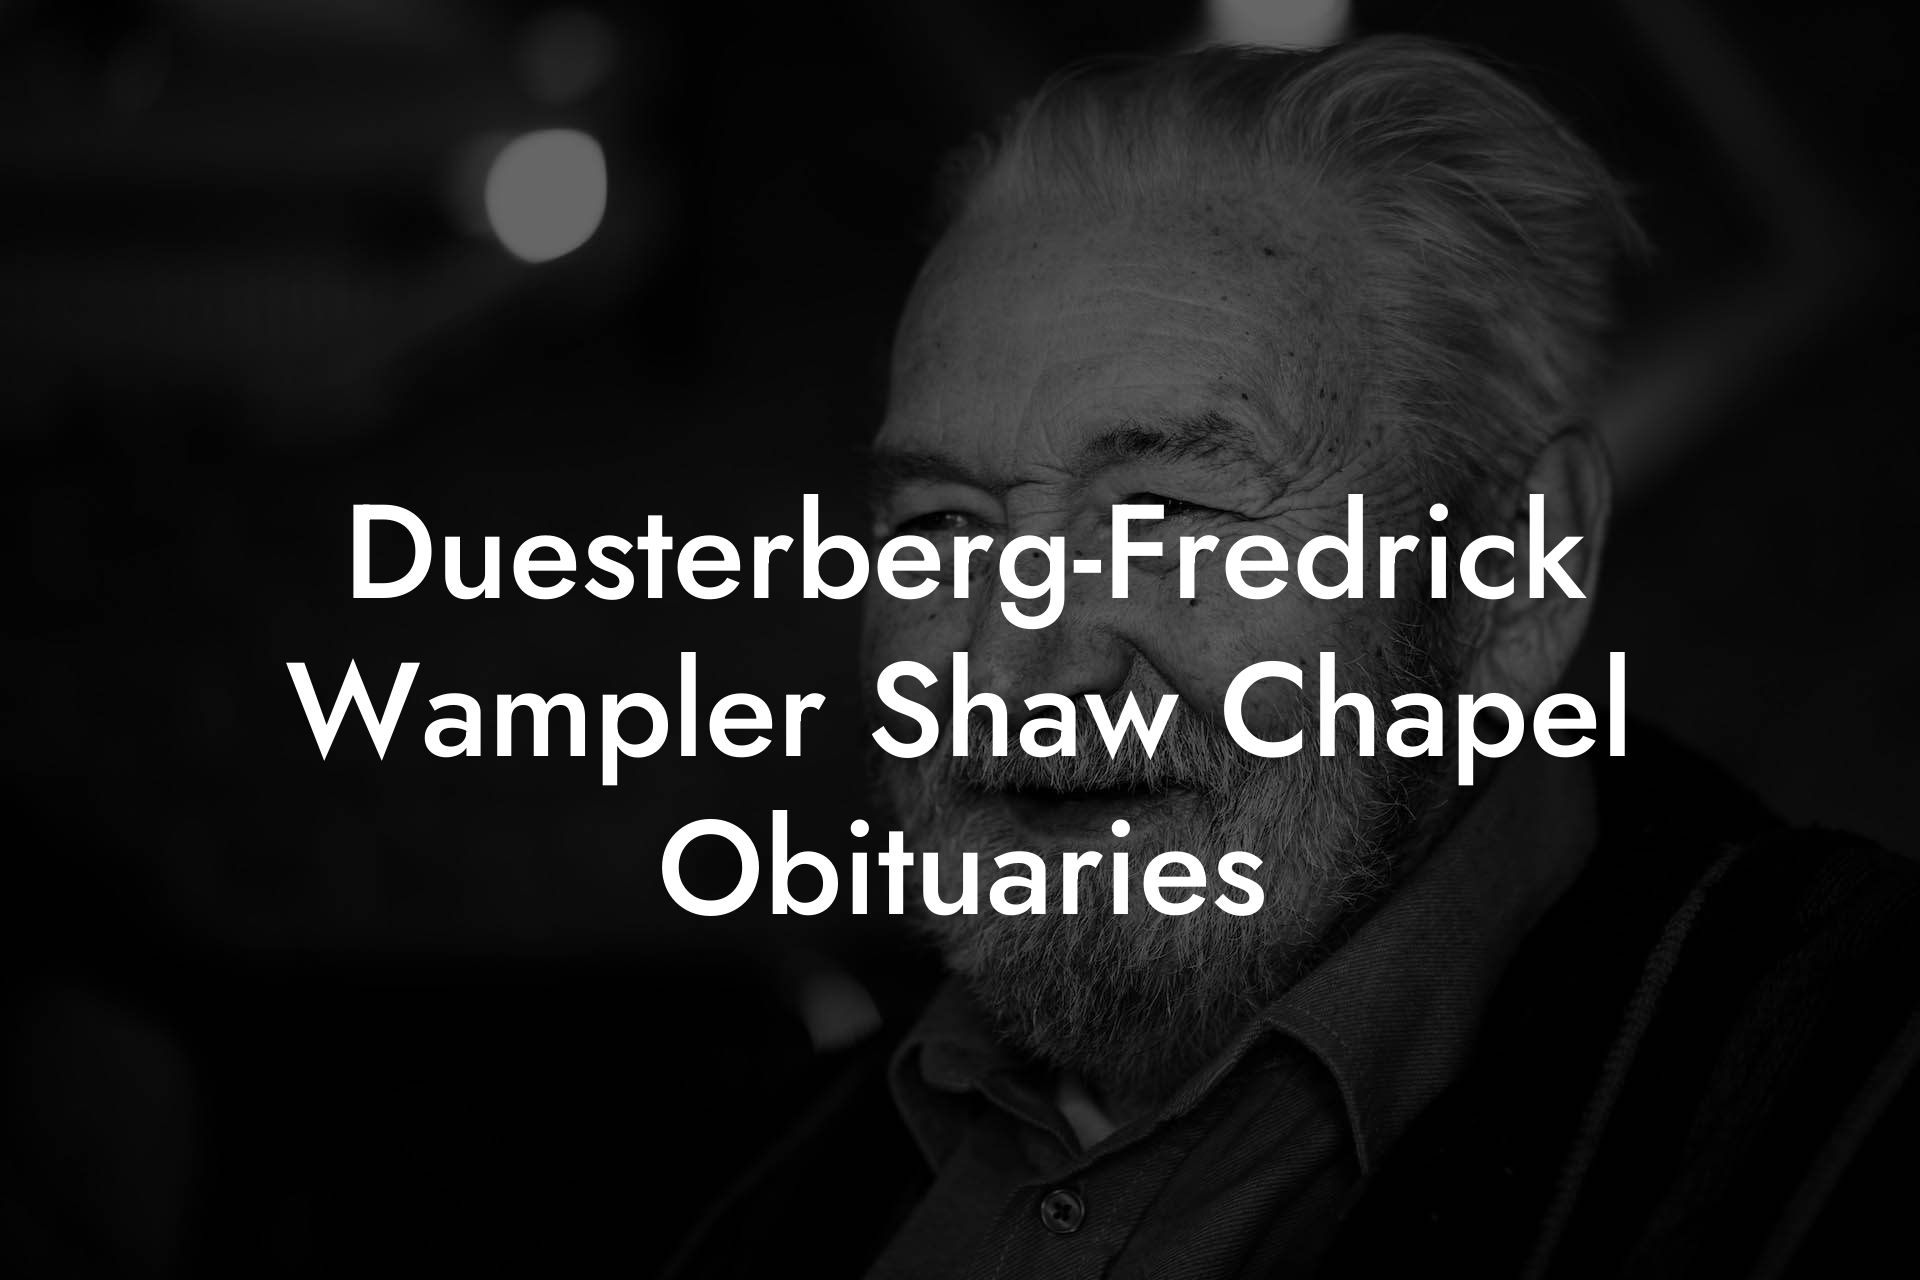 Duesterberg-Fredrick Wampler Shaw Chapel Obituaries